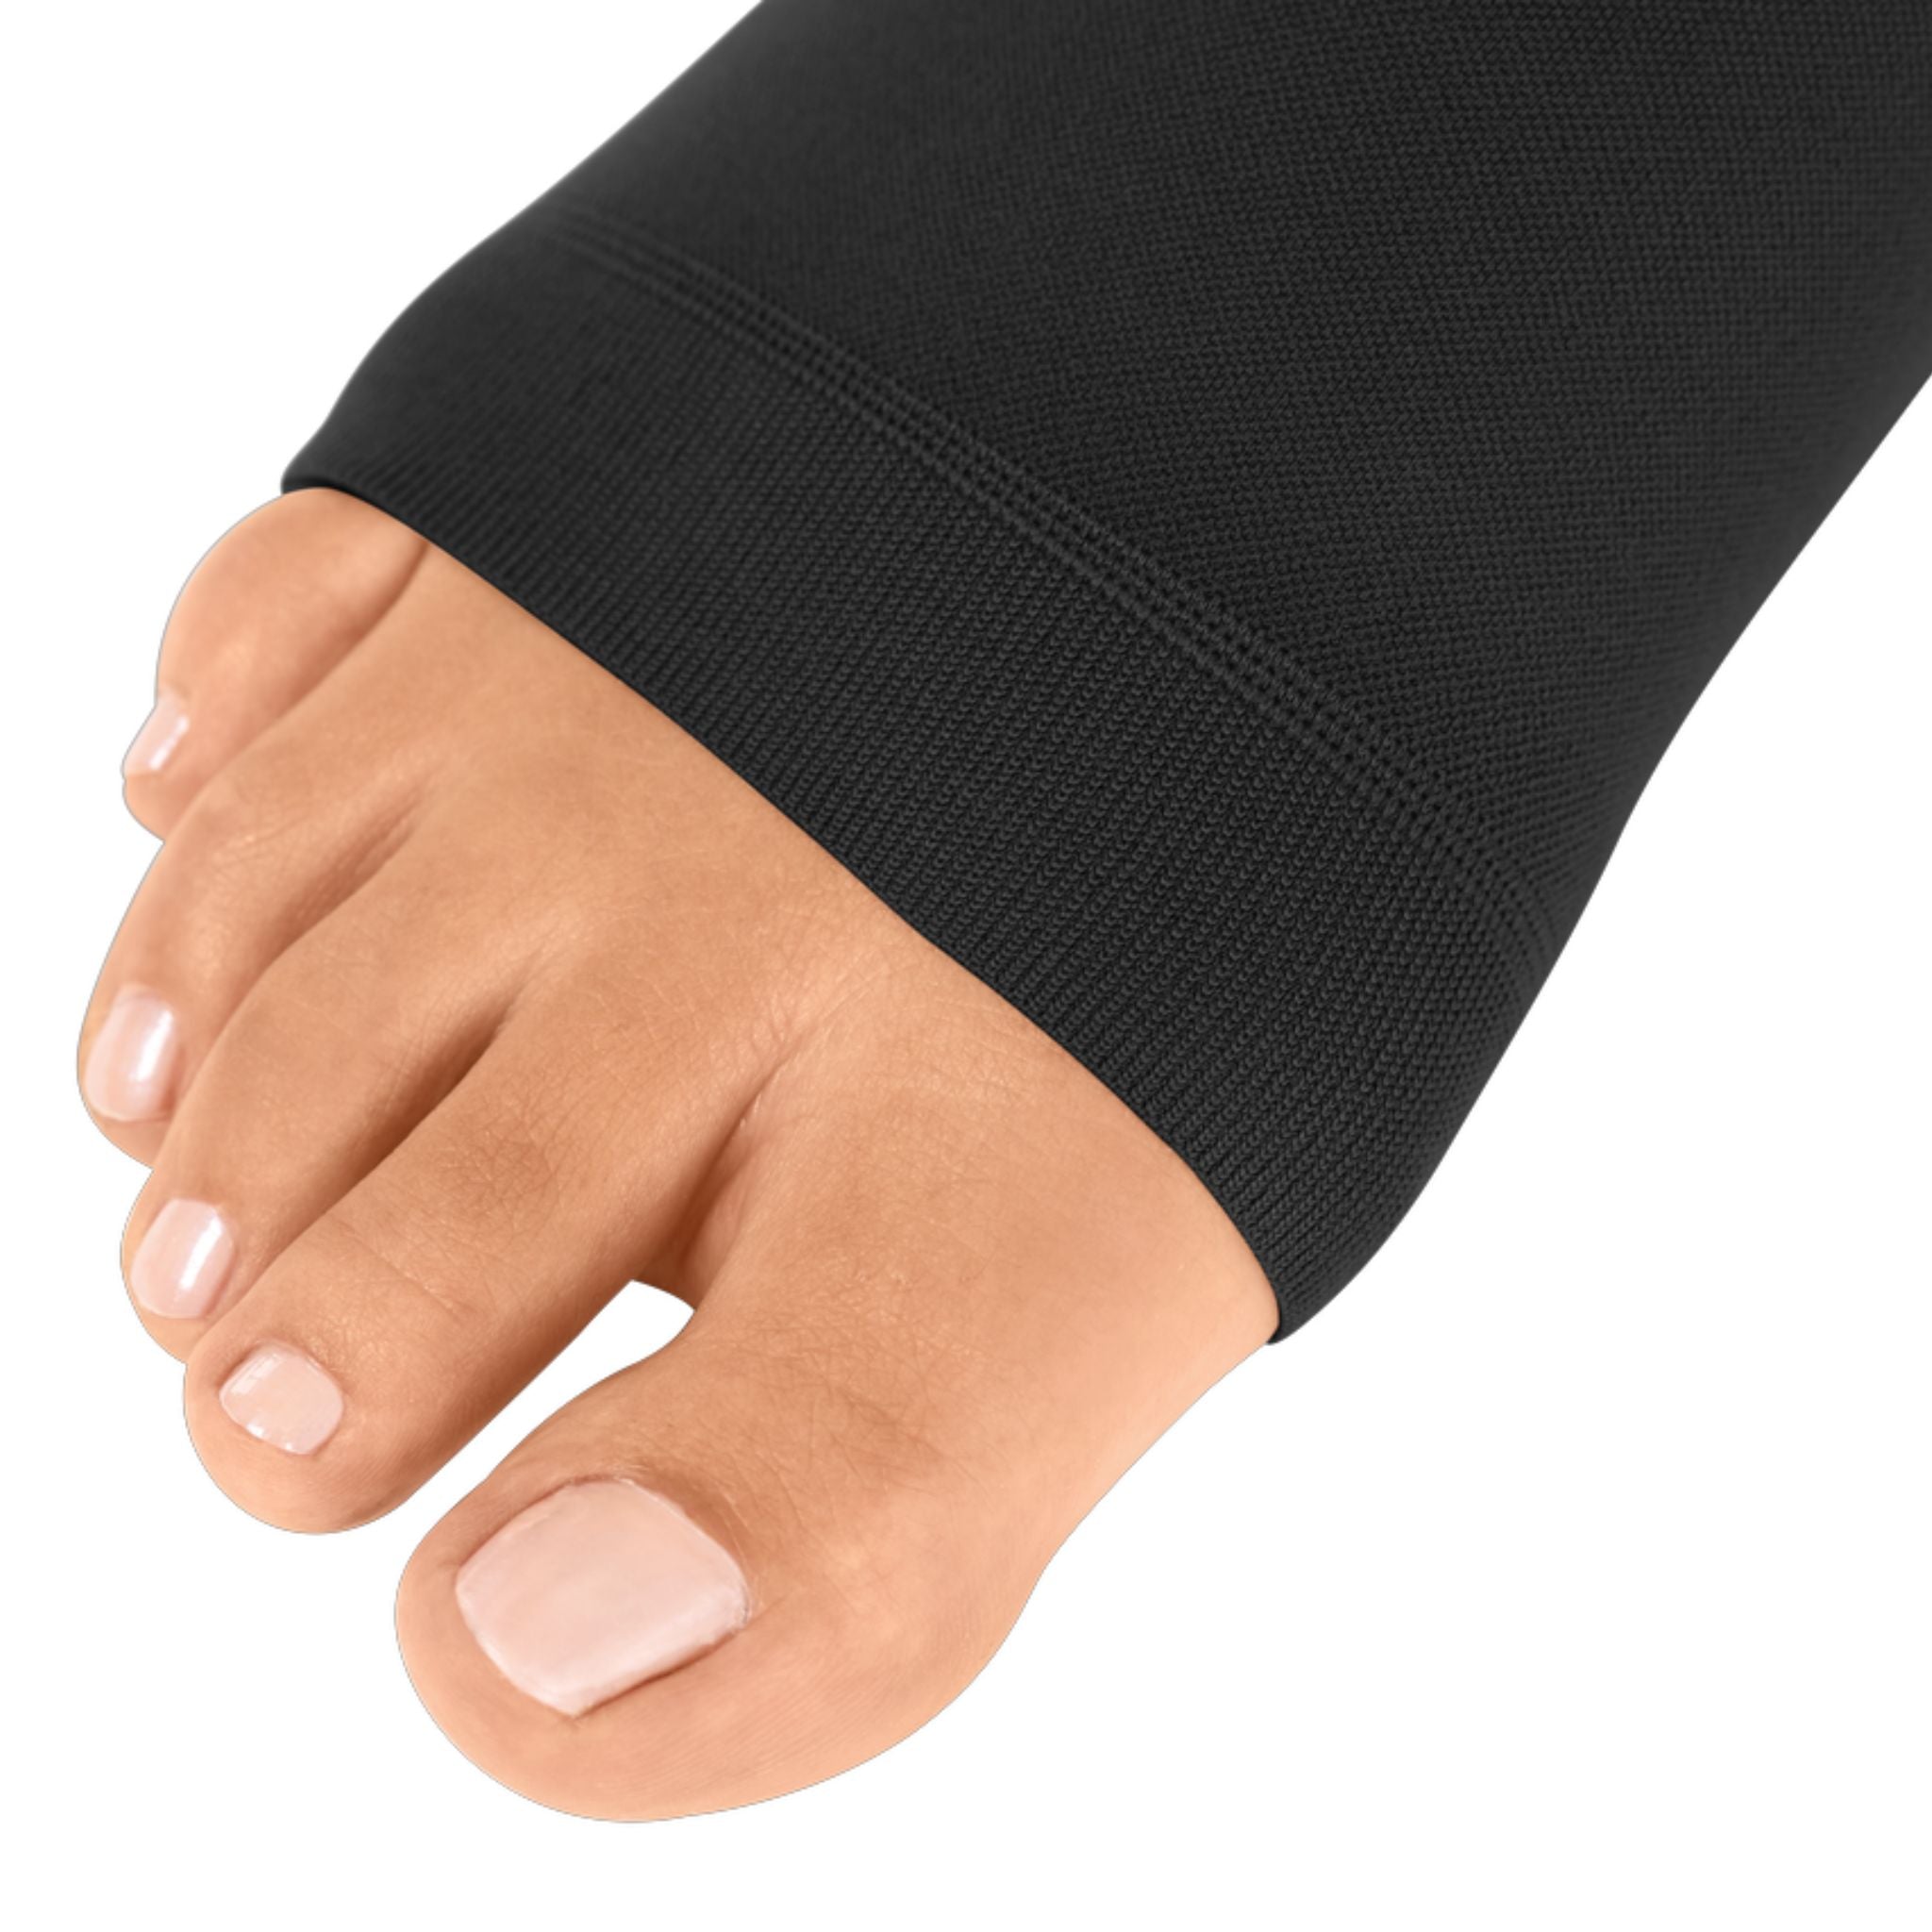 Compression Stockings  Pantyhose  Open Toe  Black  mediven cotton